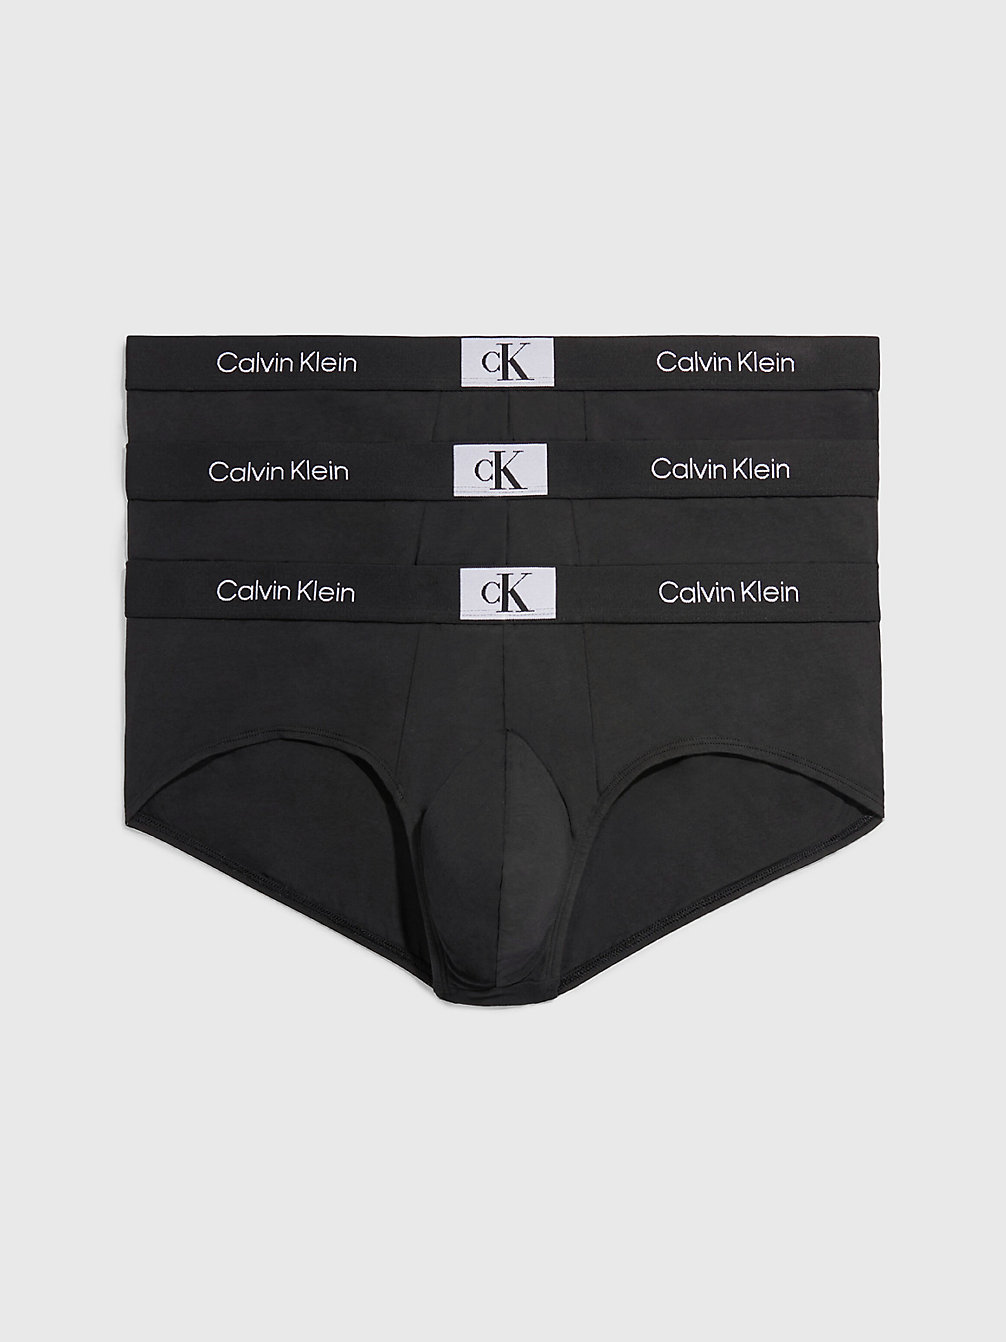 BLACK/ BLACK/ BLACK > 3-Er Pack Boxershorts In Übergröße - Ck96 > undefined Herren - Calvin Klein